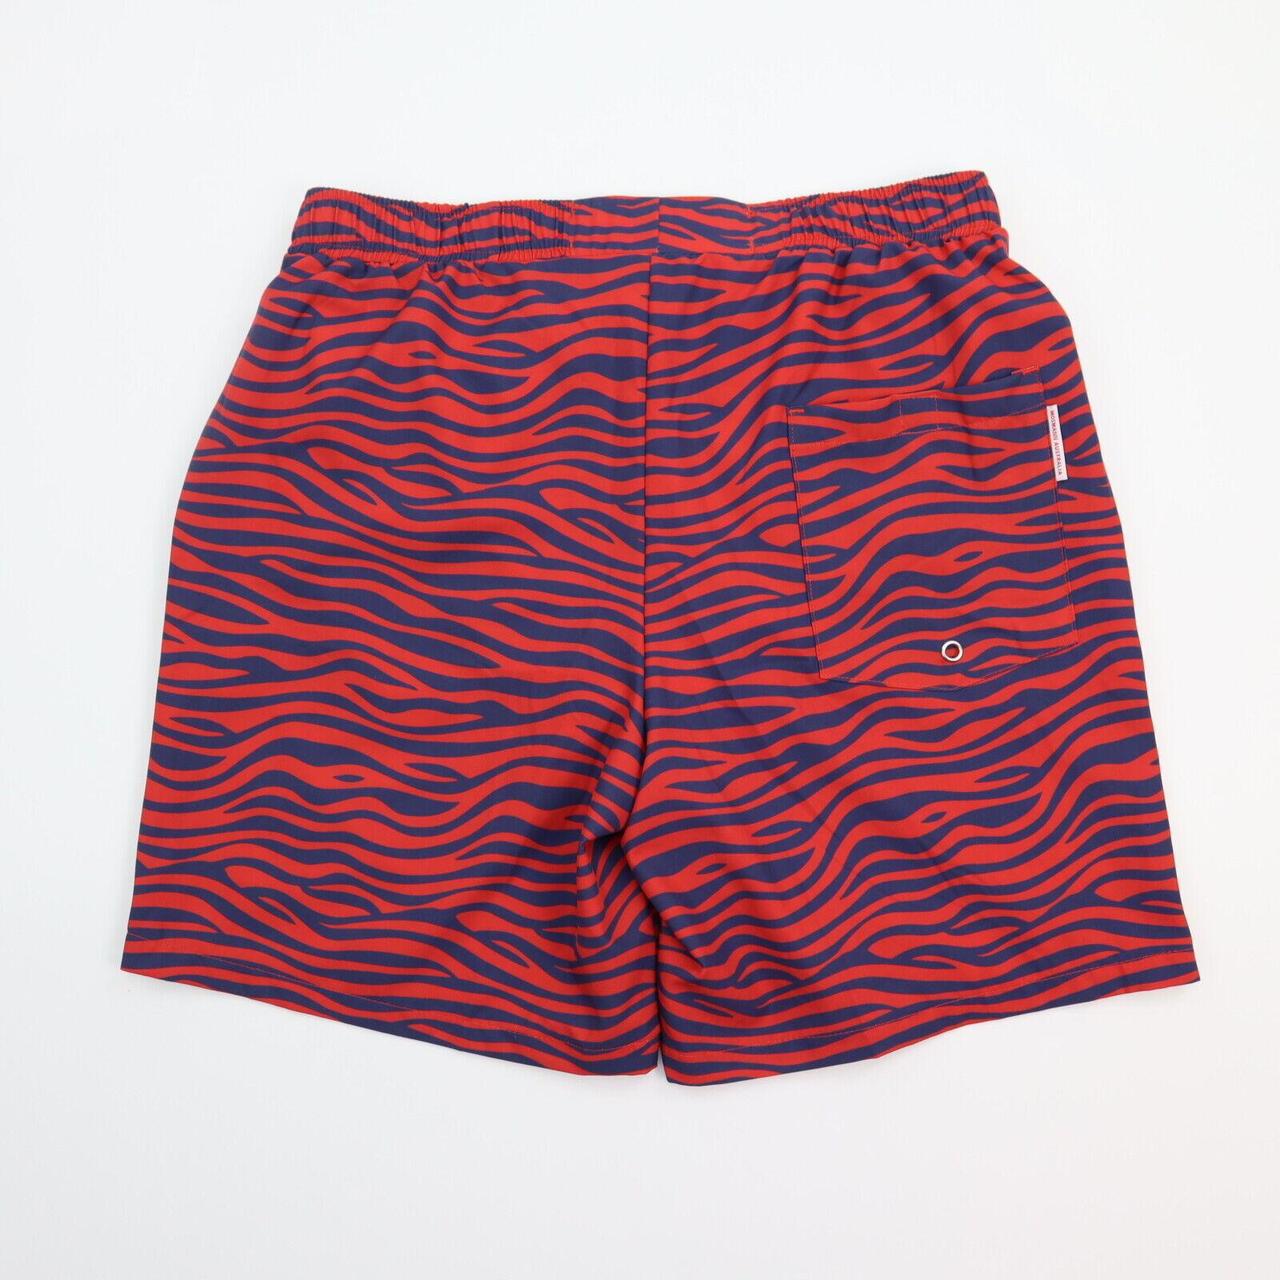 Product Image 2 - Mosmann Australia Swim Trunks Shorts